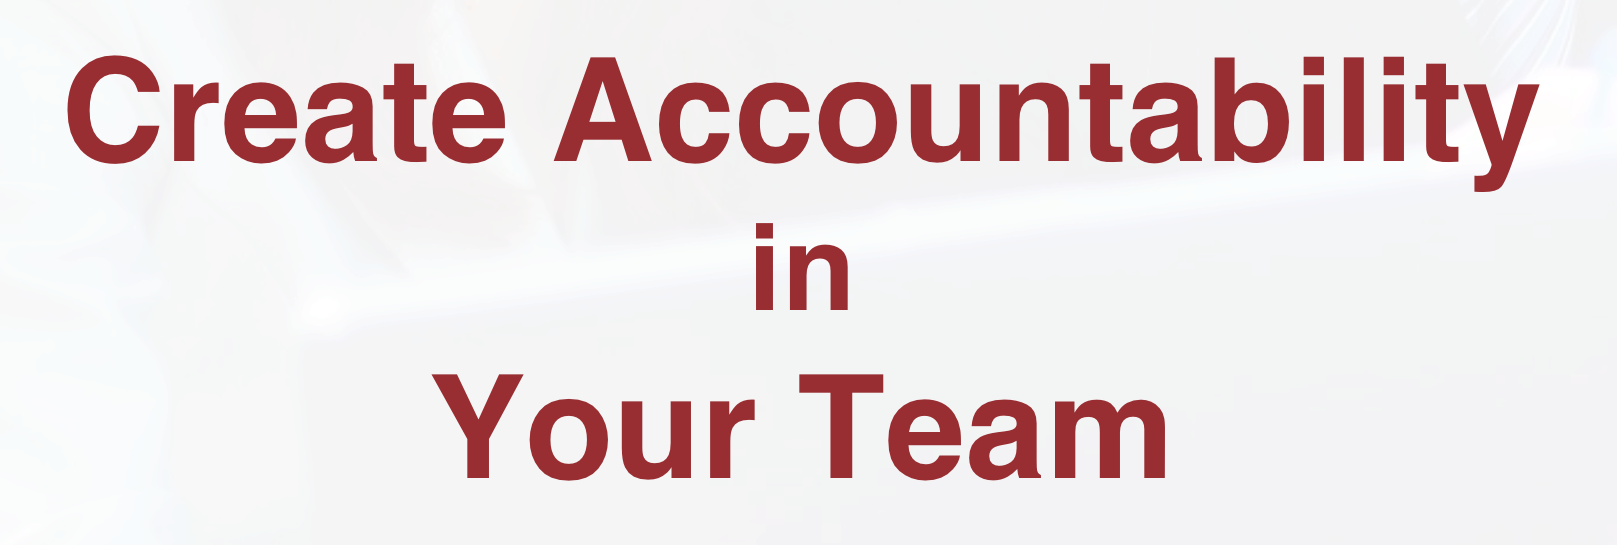 Create Accountability in Your Team